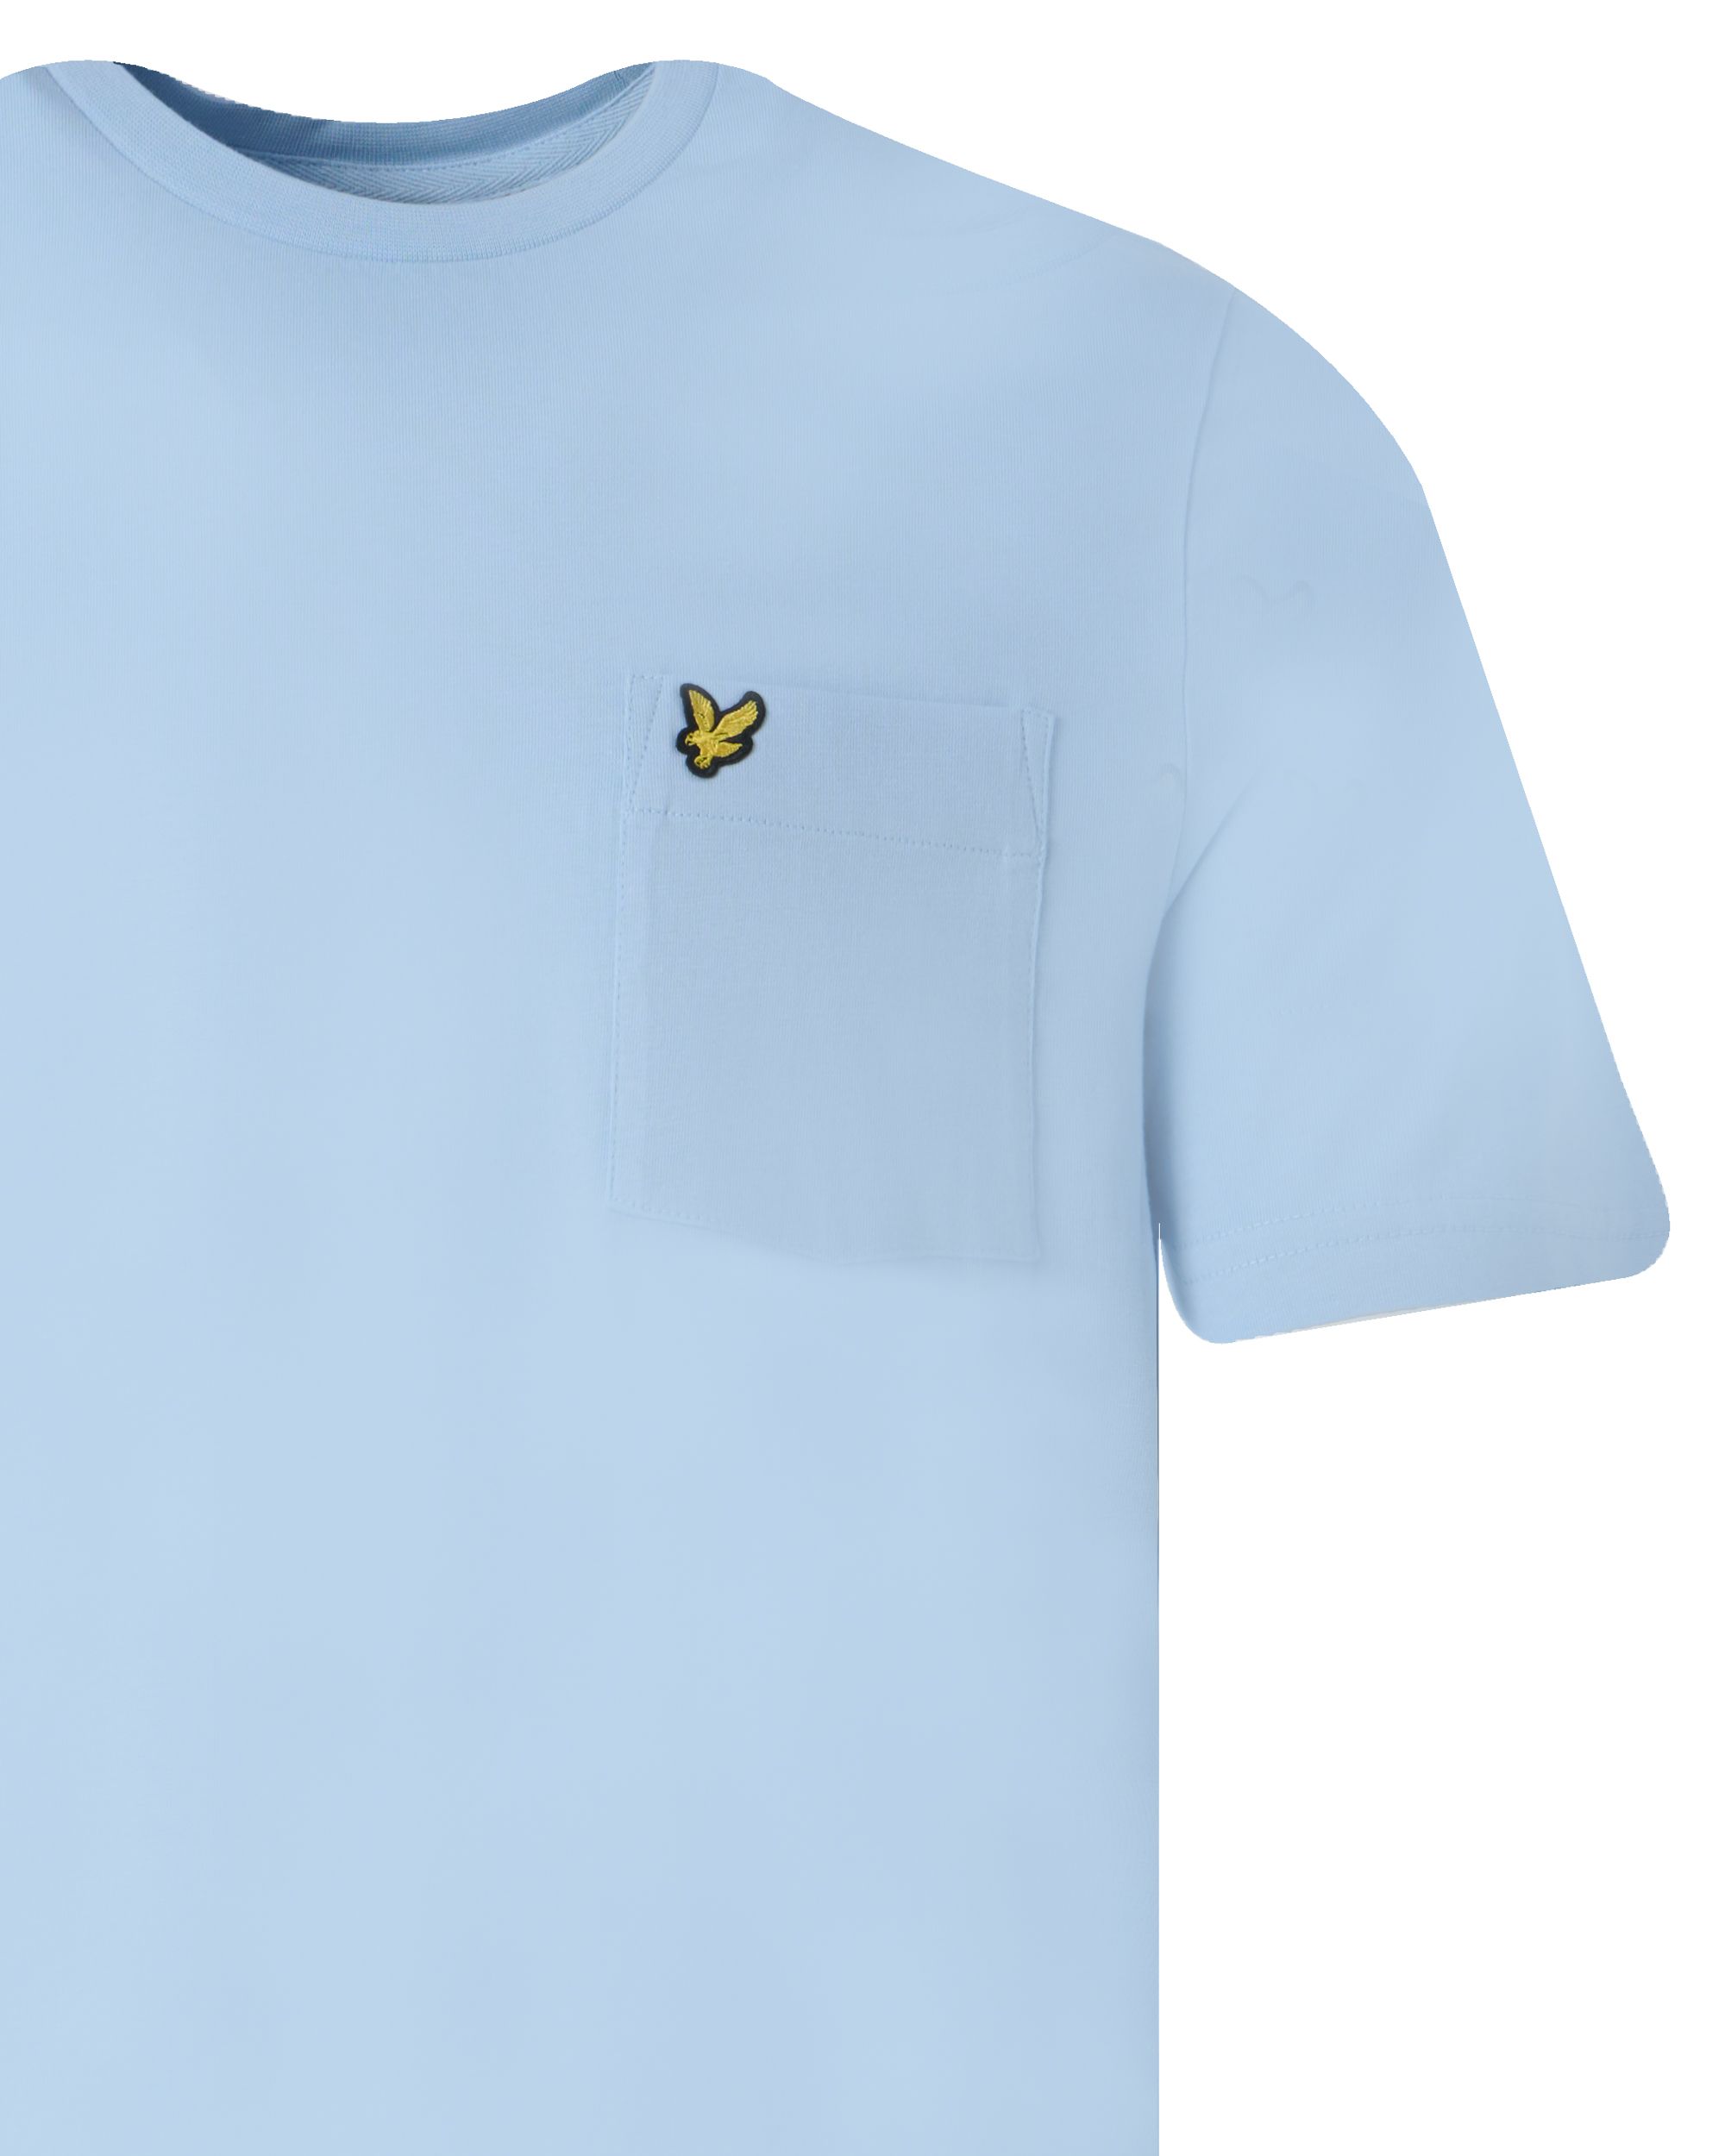 Lyle & Scott T-shirt KM Licht blauw 095442-001-L